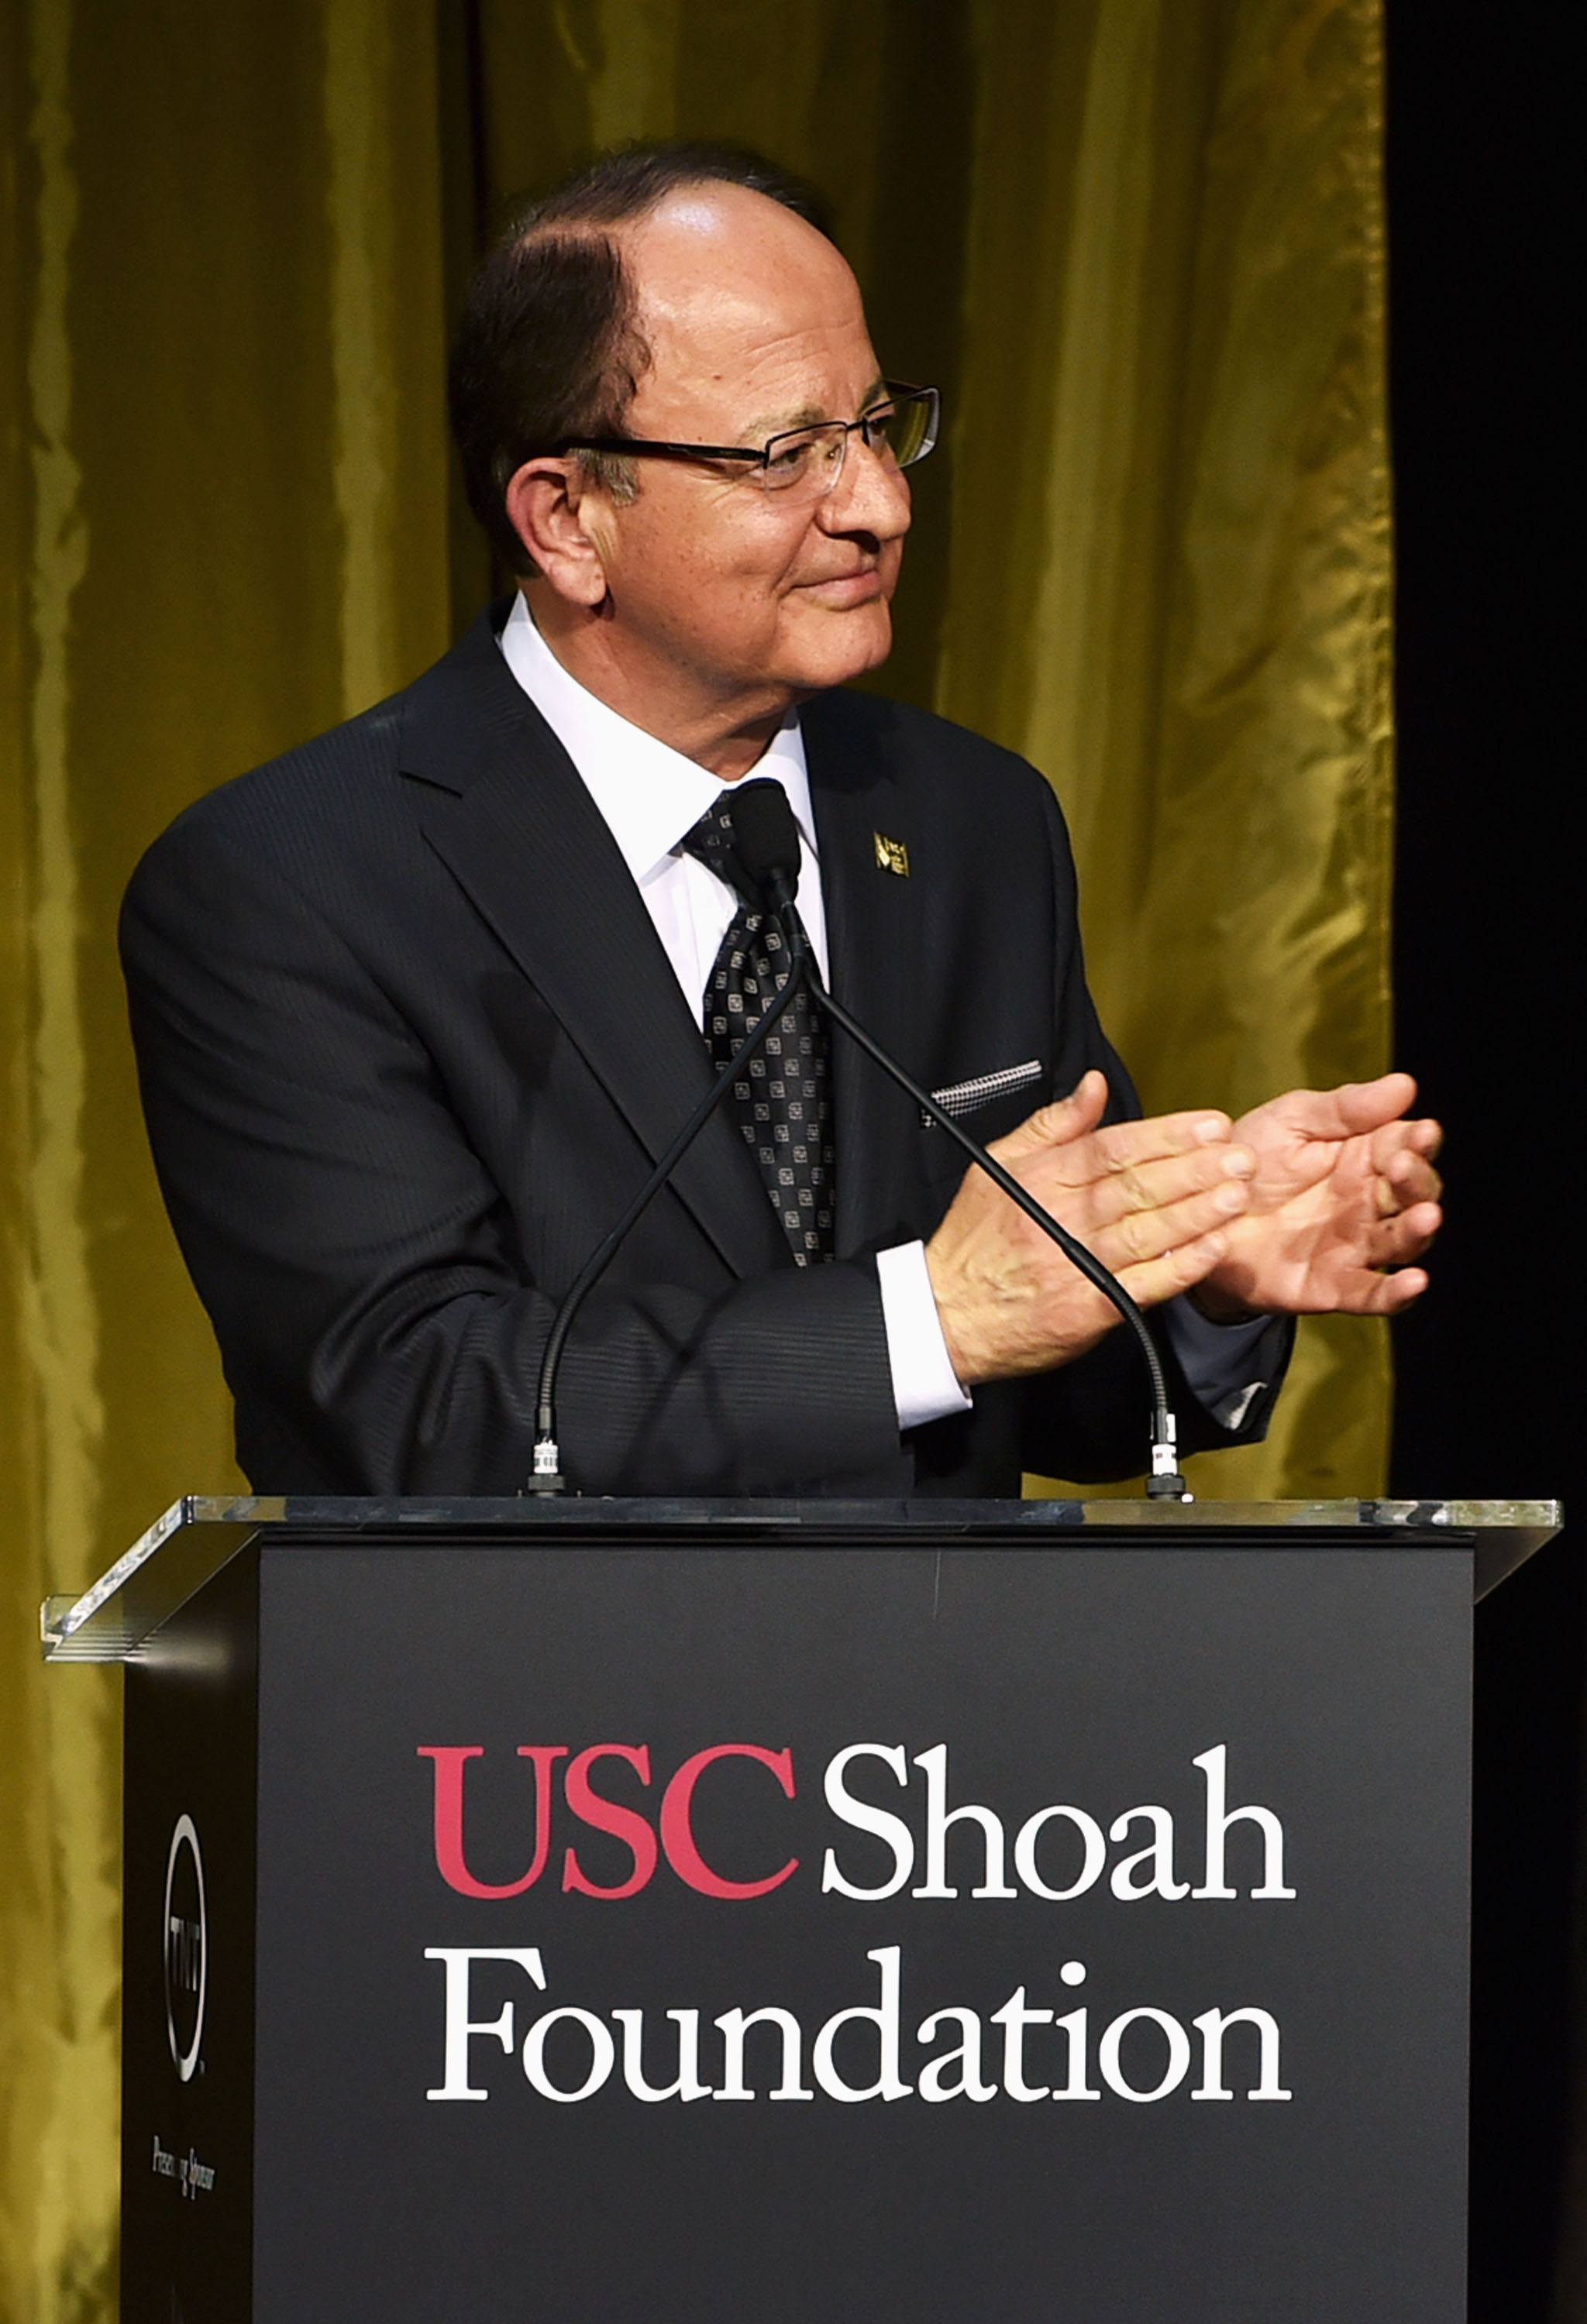 USC Shoah Foundation and Steven Spielberg Honor President Barack Obama with Ambassador ...